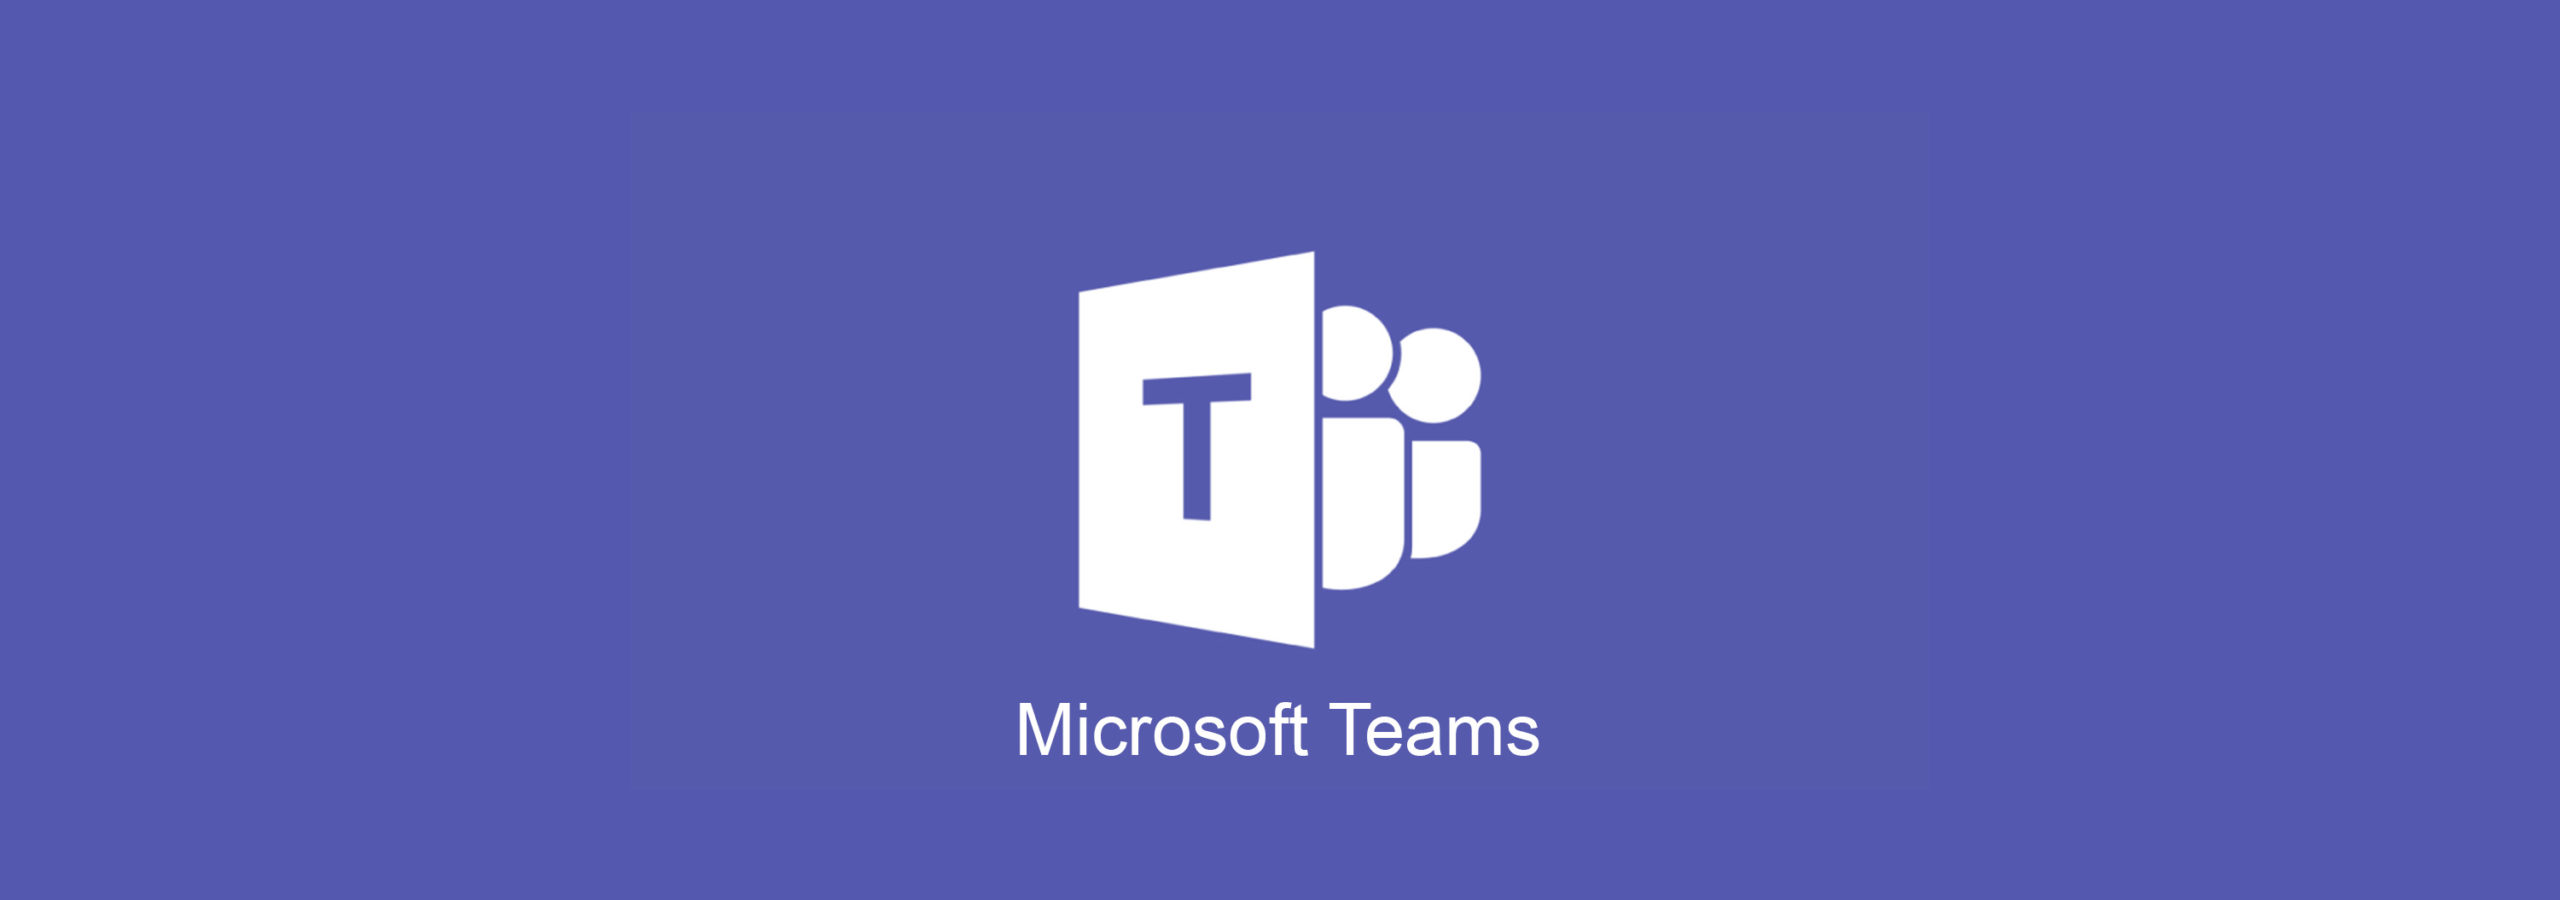 microsoft teams logo